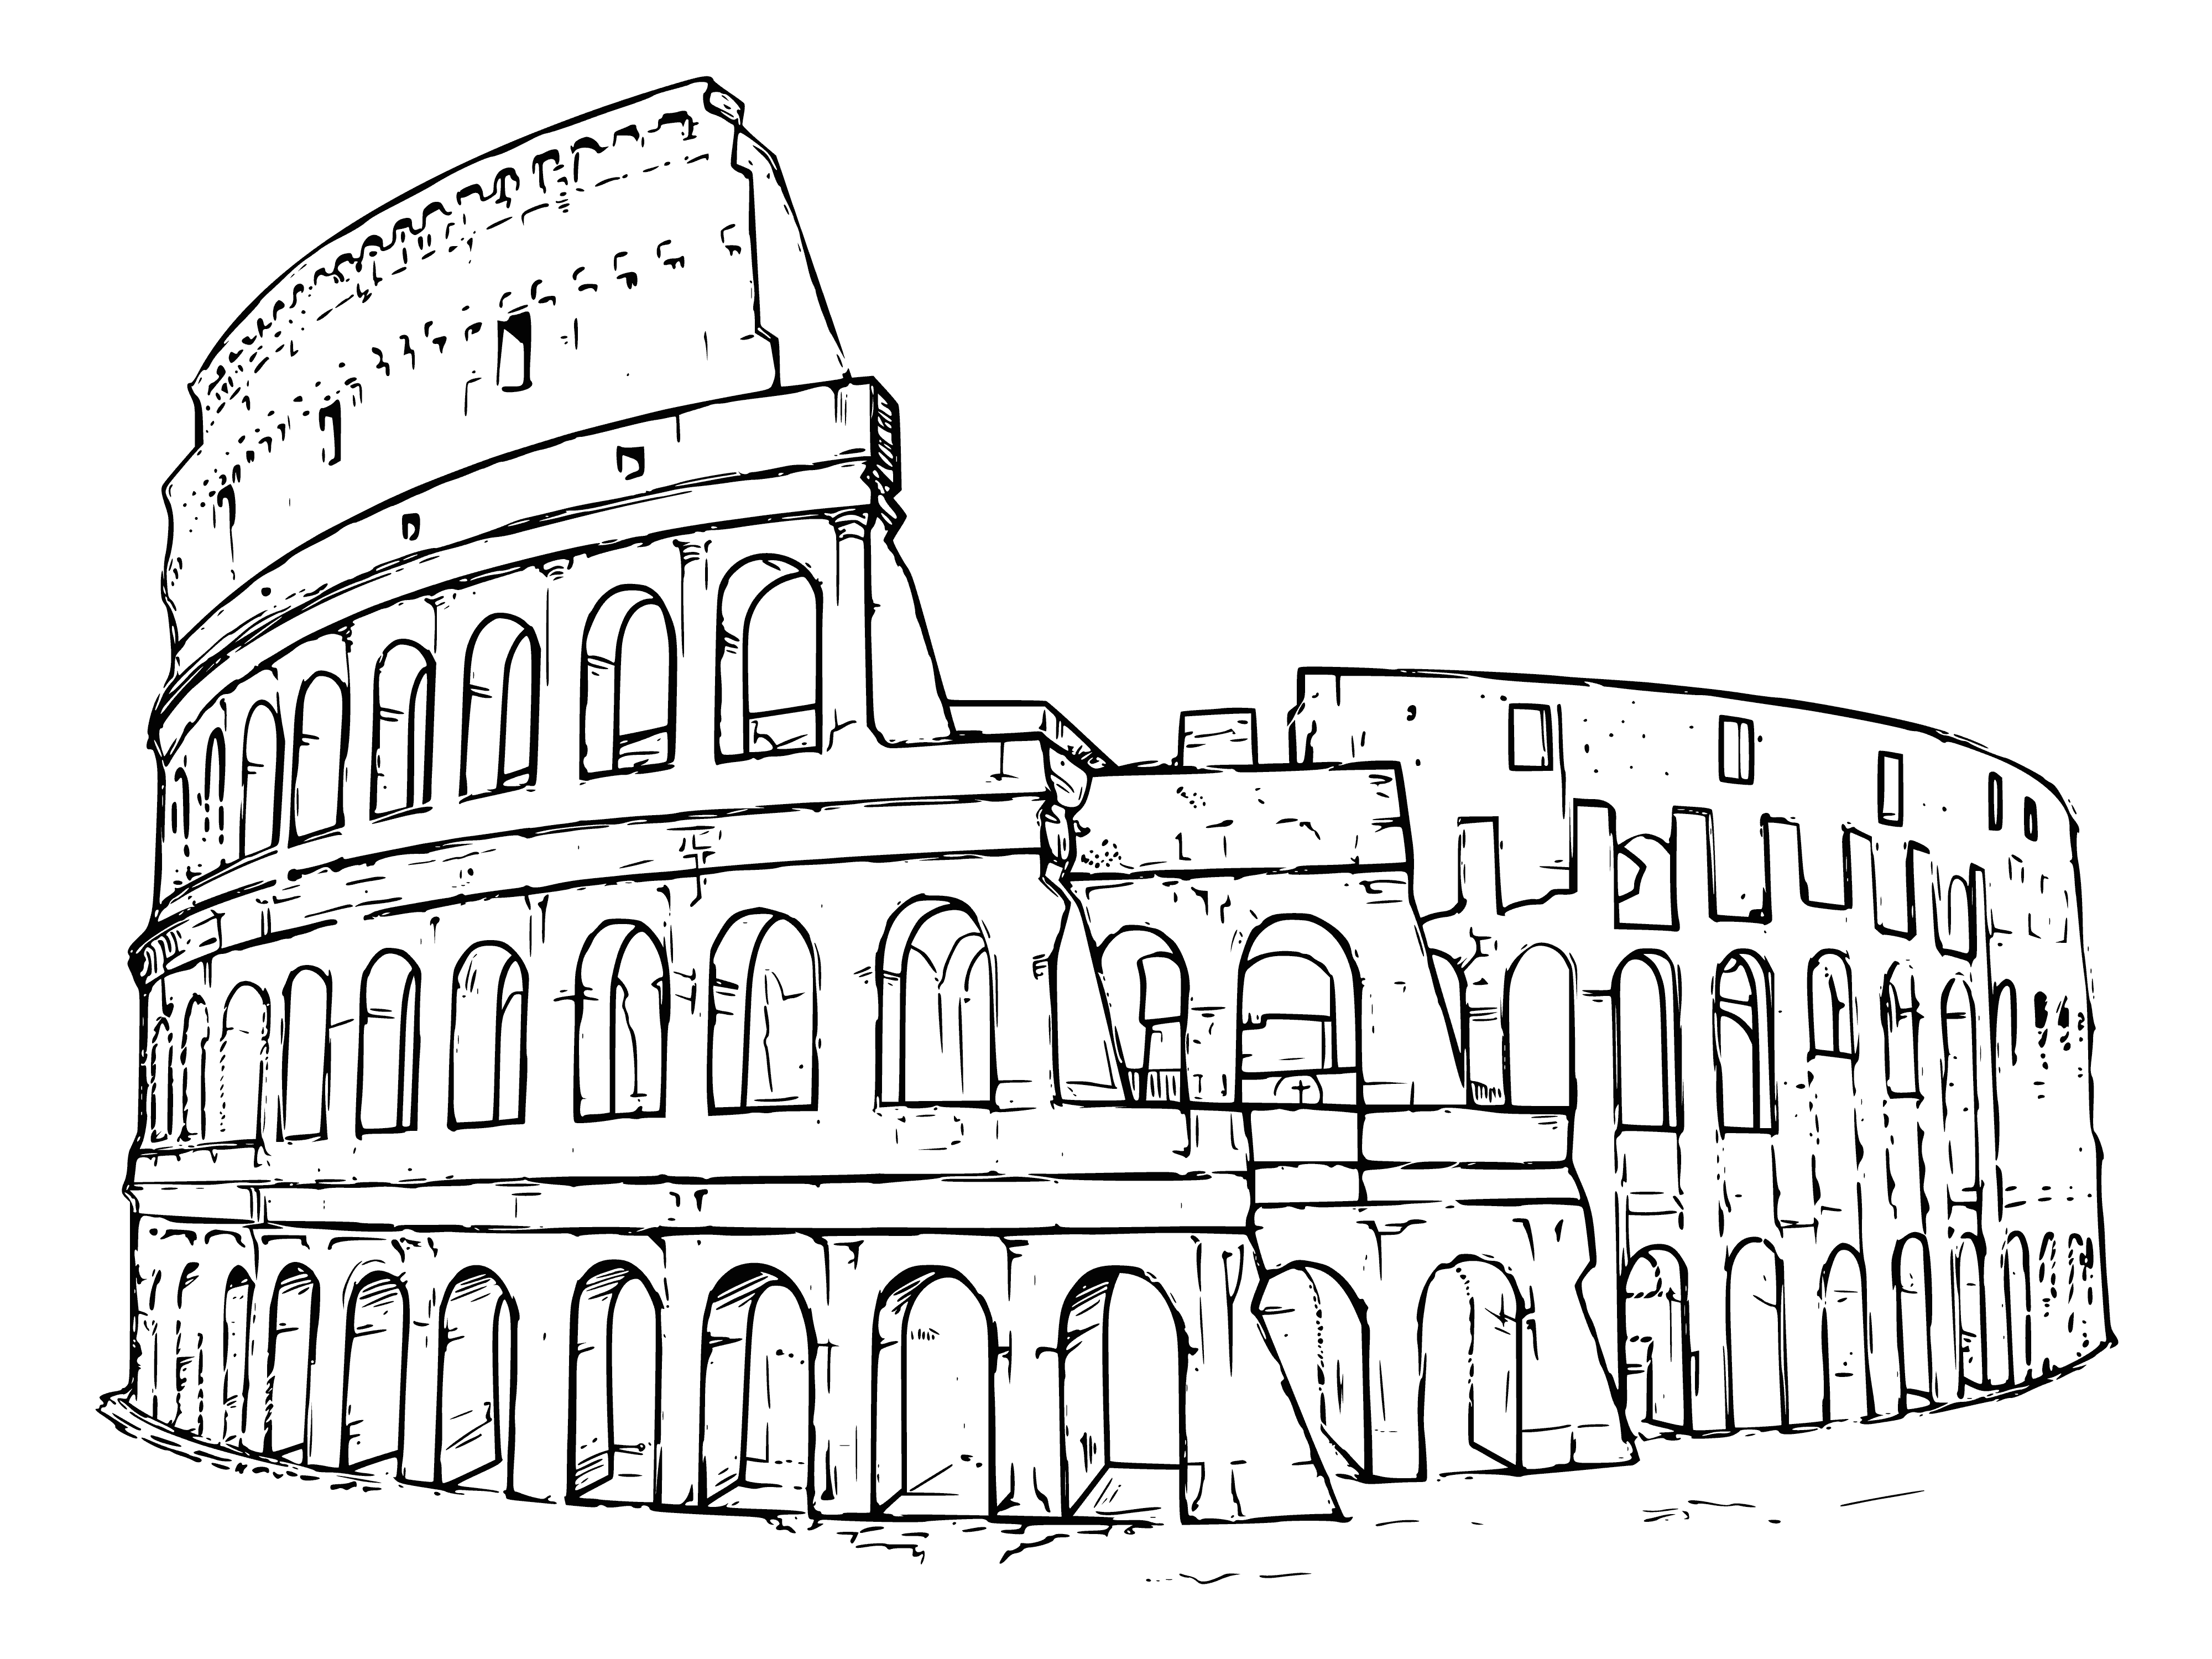 Colosseum in Rome. Italië inkleurbladsy